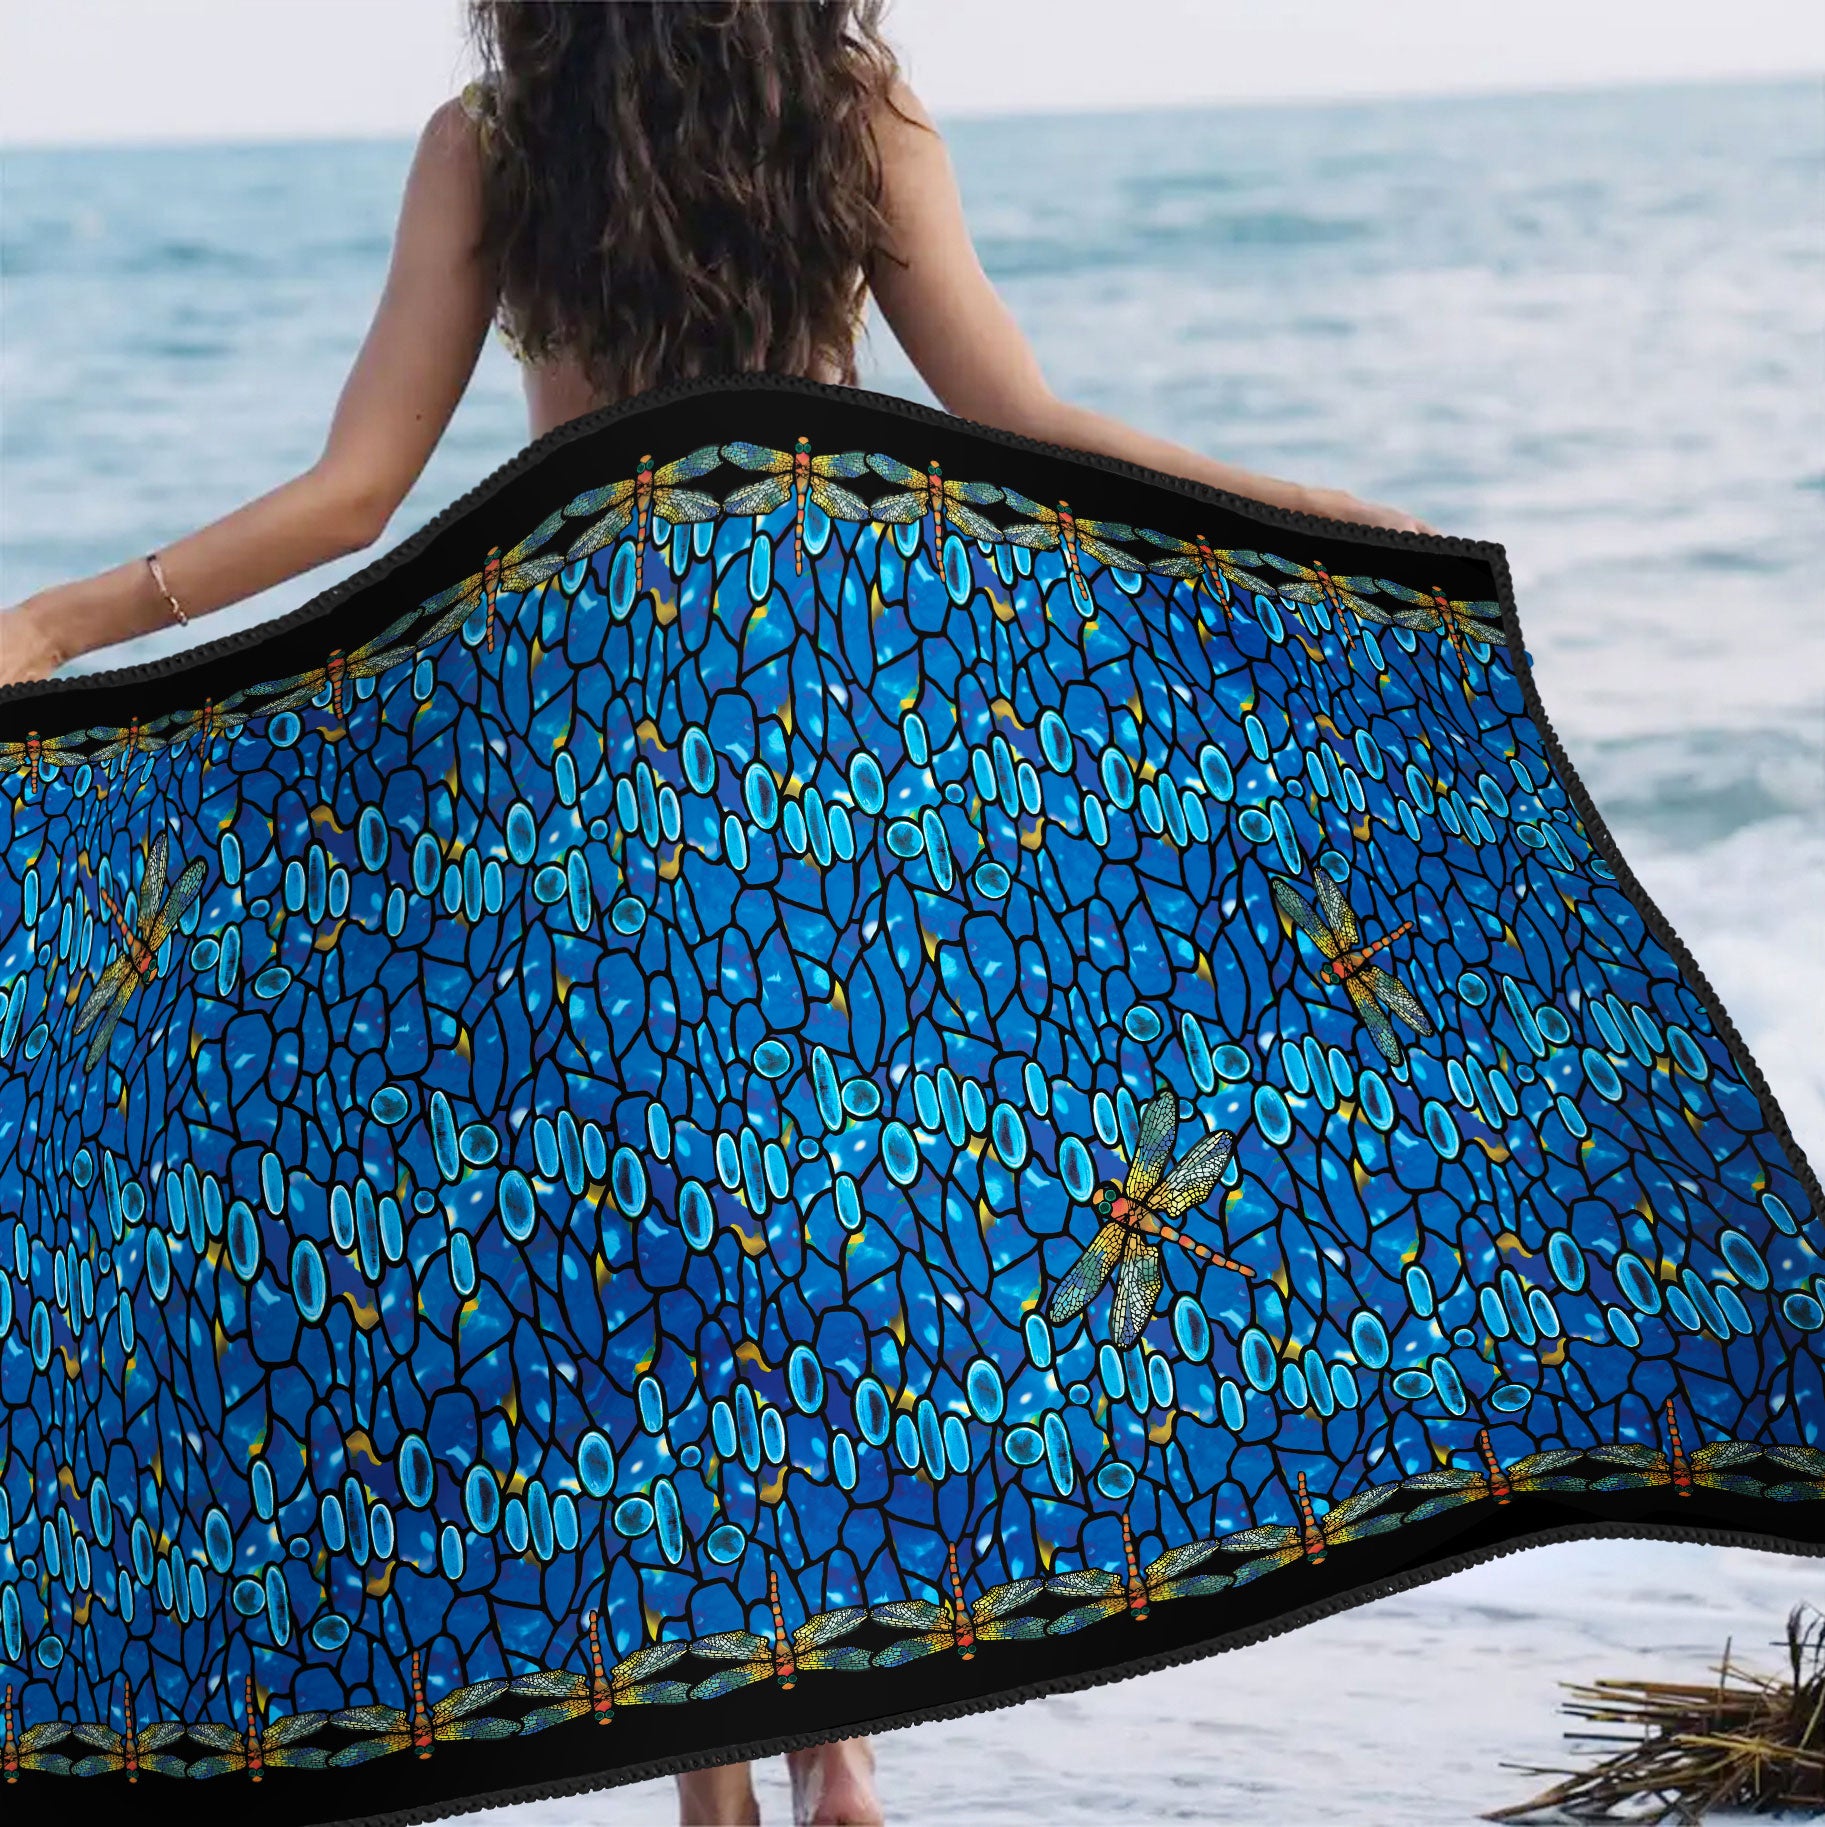 Oversized Beach Towel 40x63" - Microfiber, Quick-Dry, Tiffany Dragonfly